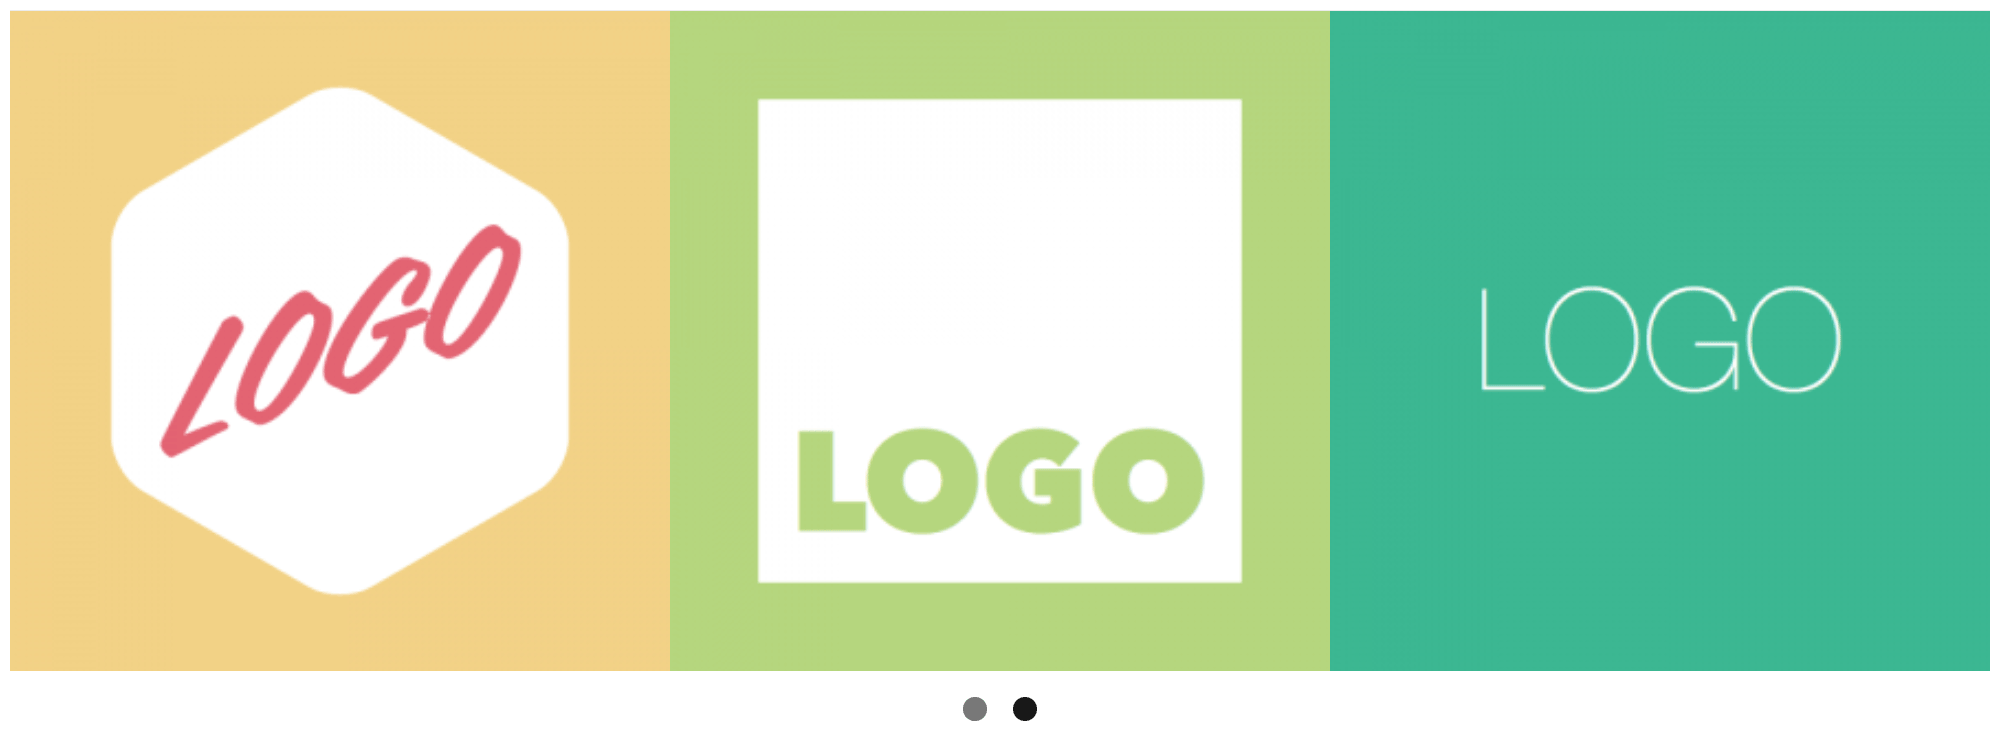 Client Logos Slider 